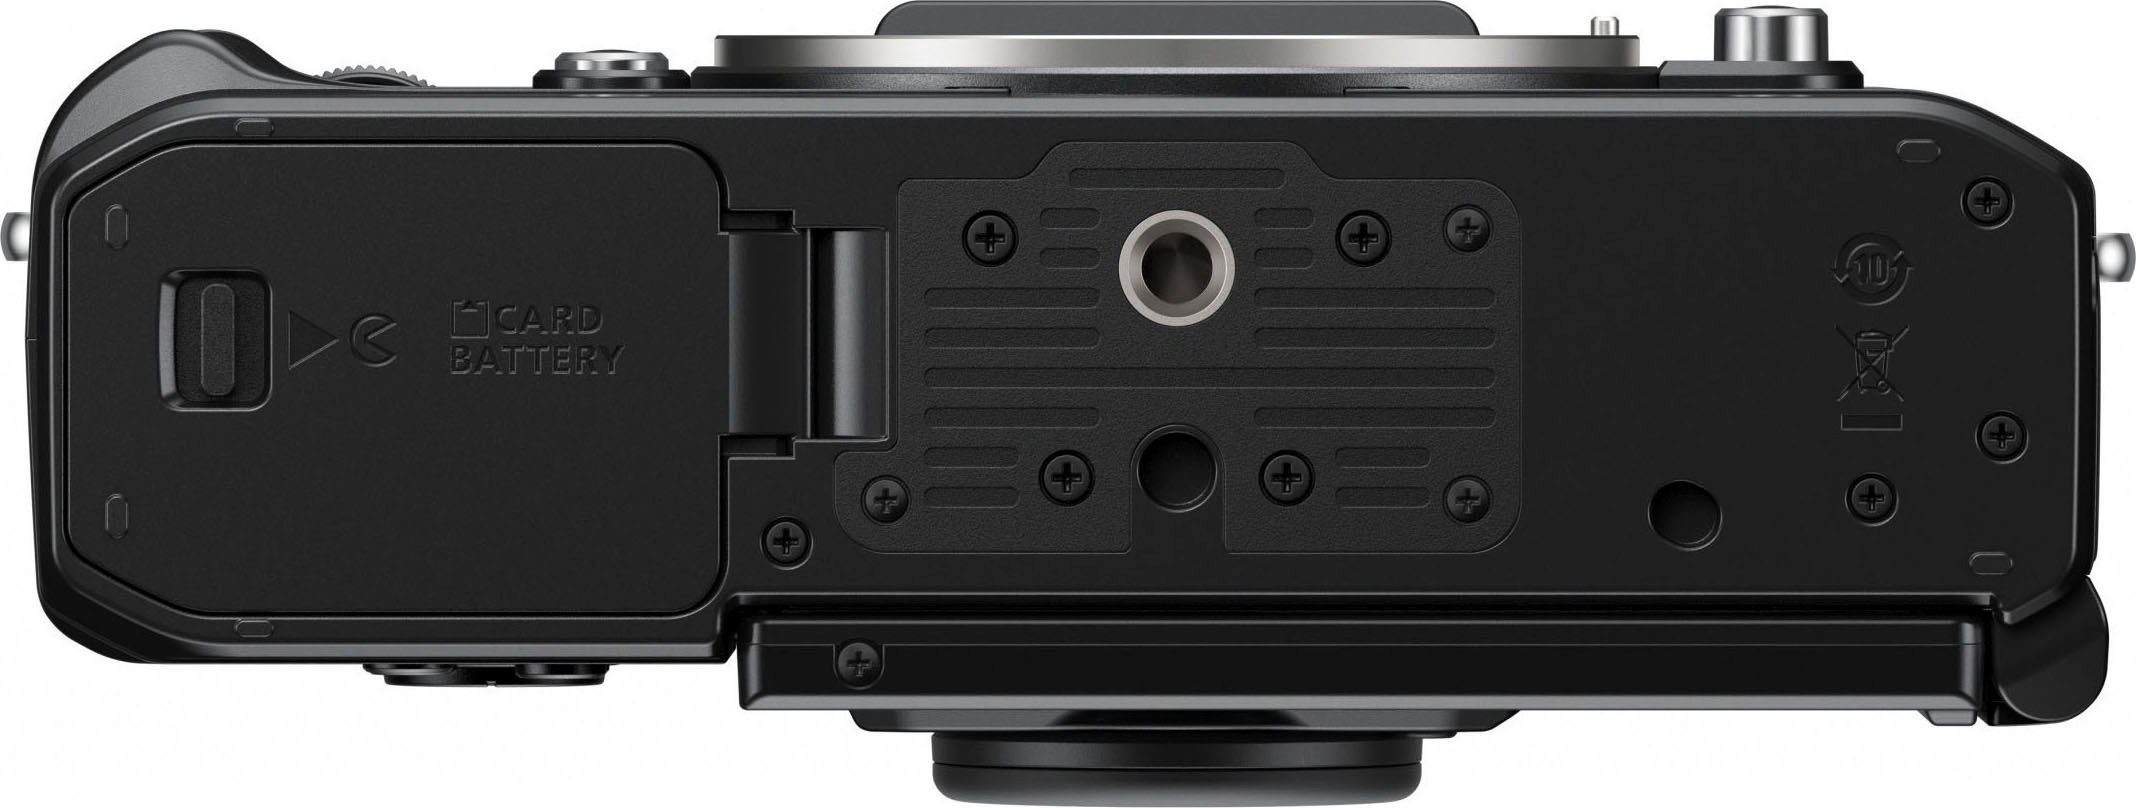 WLAN) f Systemkamera-Body Nikon Z (Bluetooth,